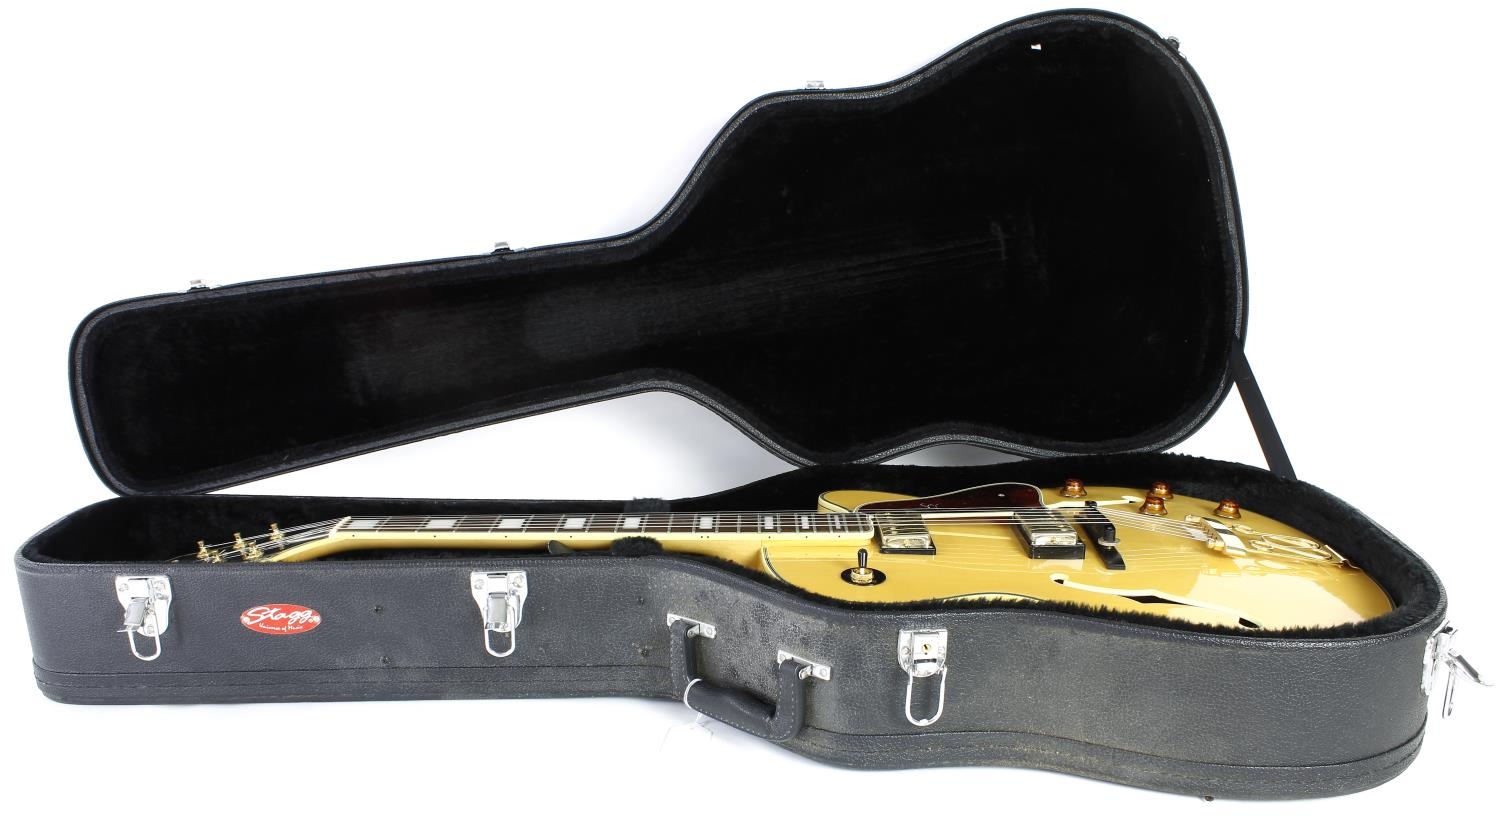 2001 Epiphone Emperor Joe Pass signature hollow body electric guitar, made in Korea, ser. no. - Image 3 of 3